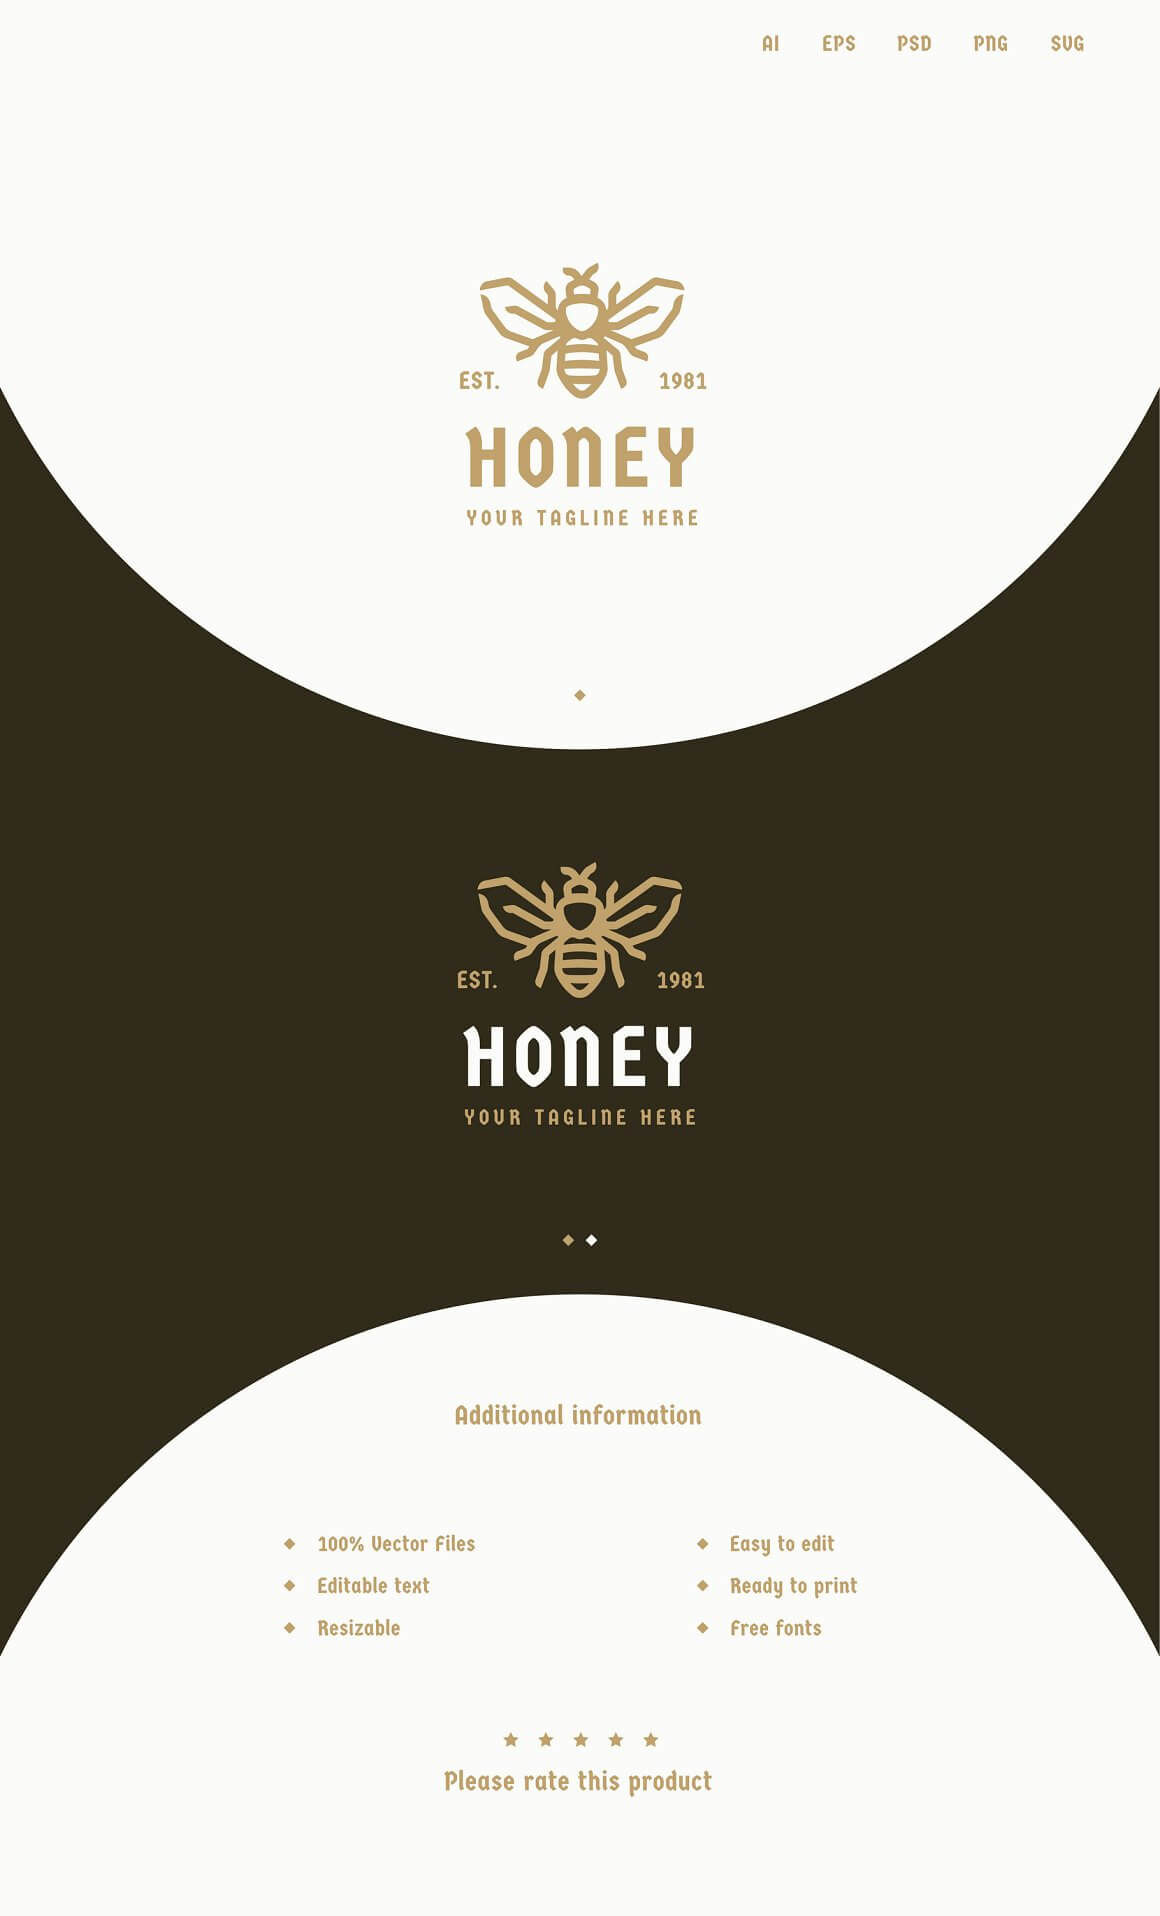 Additional information of Honey logo.